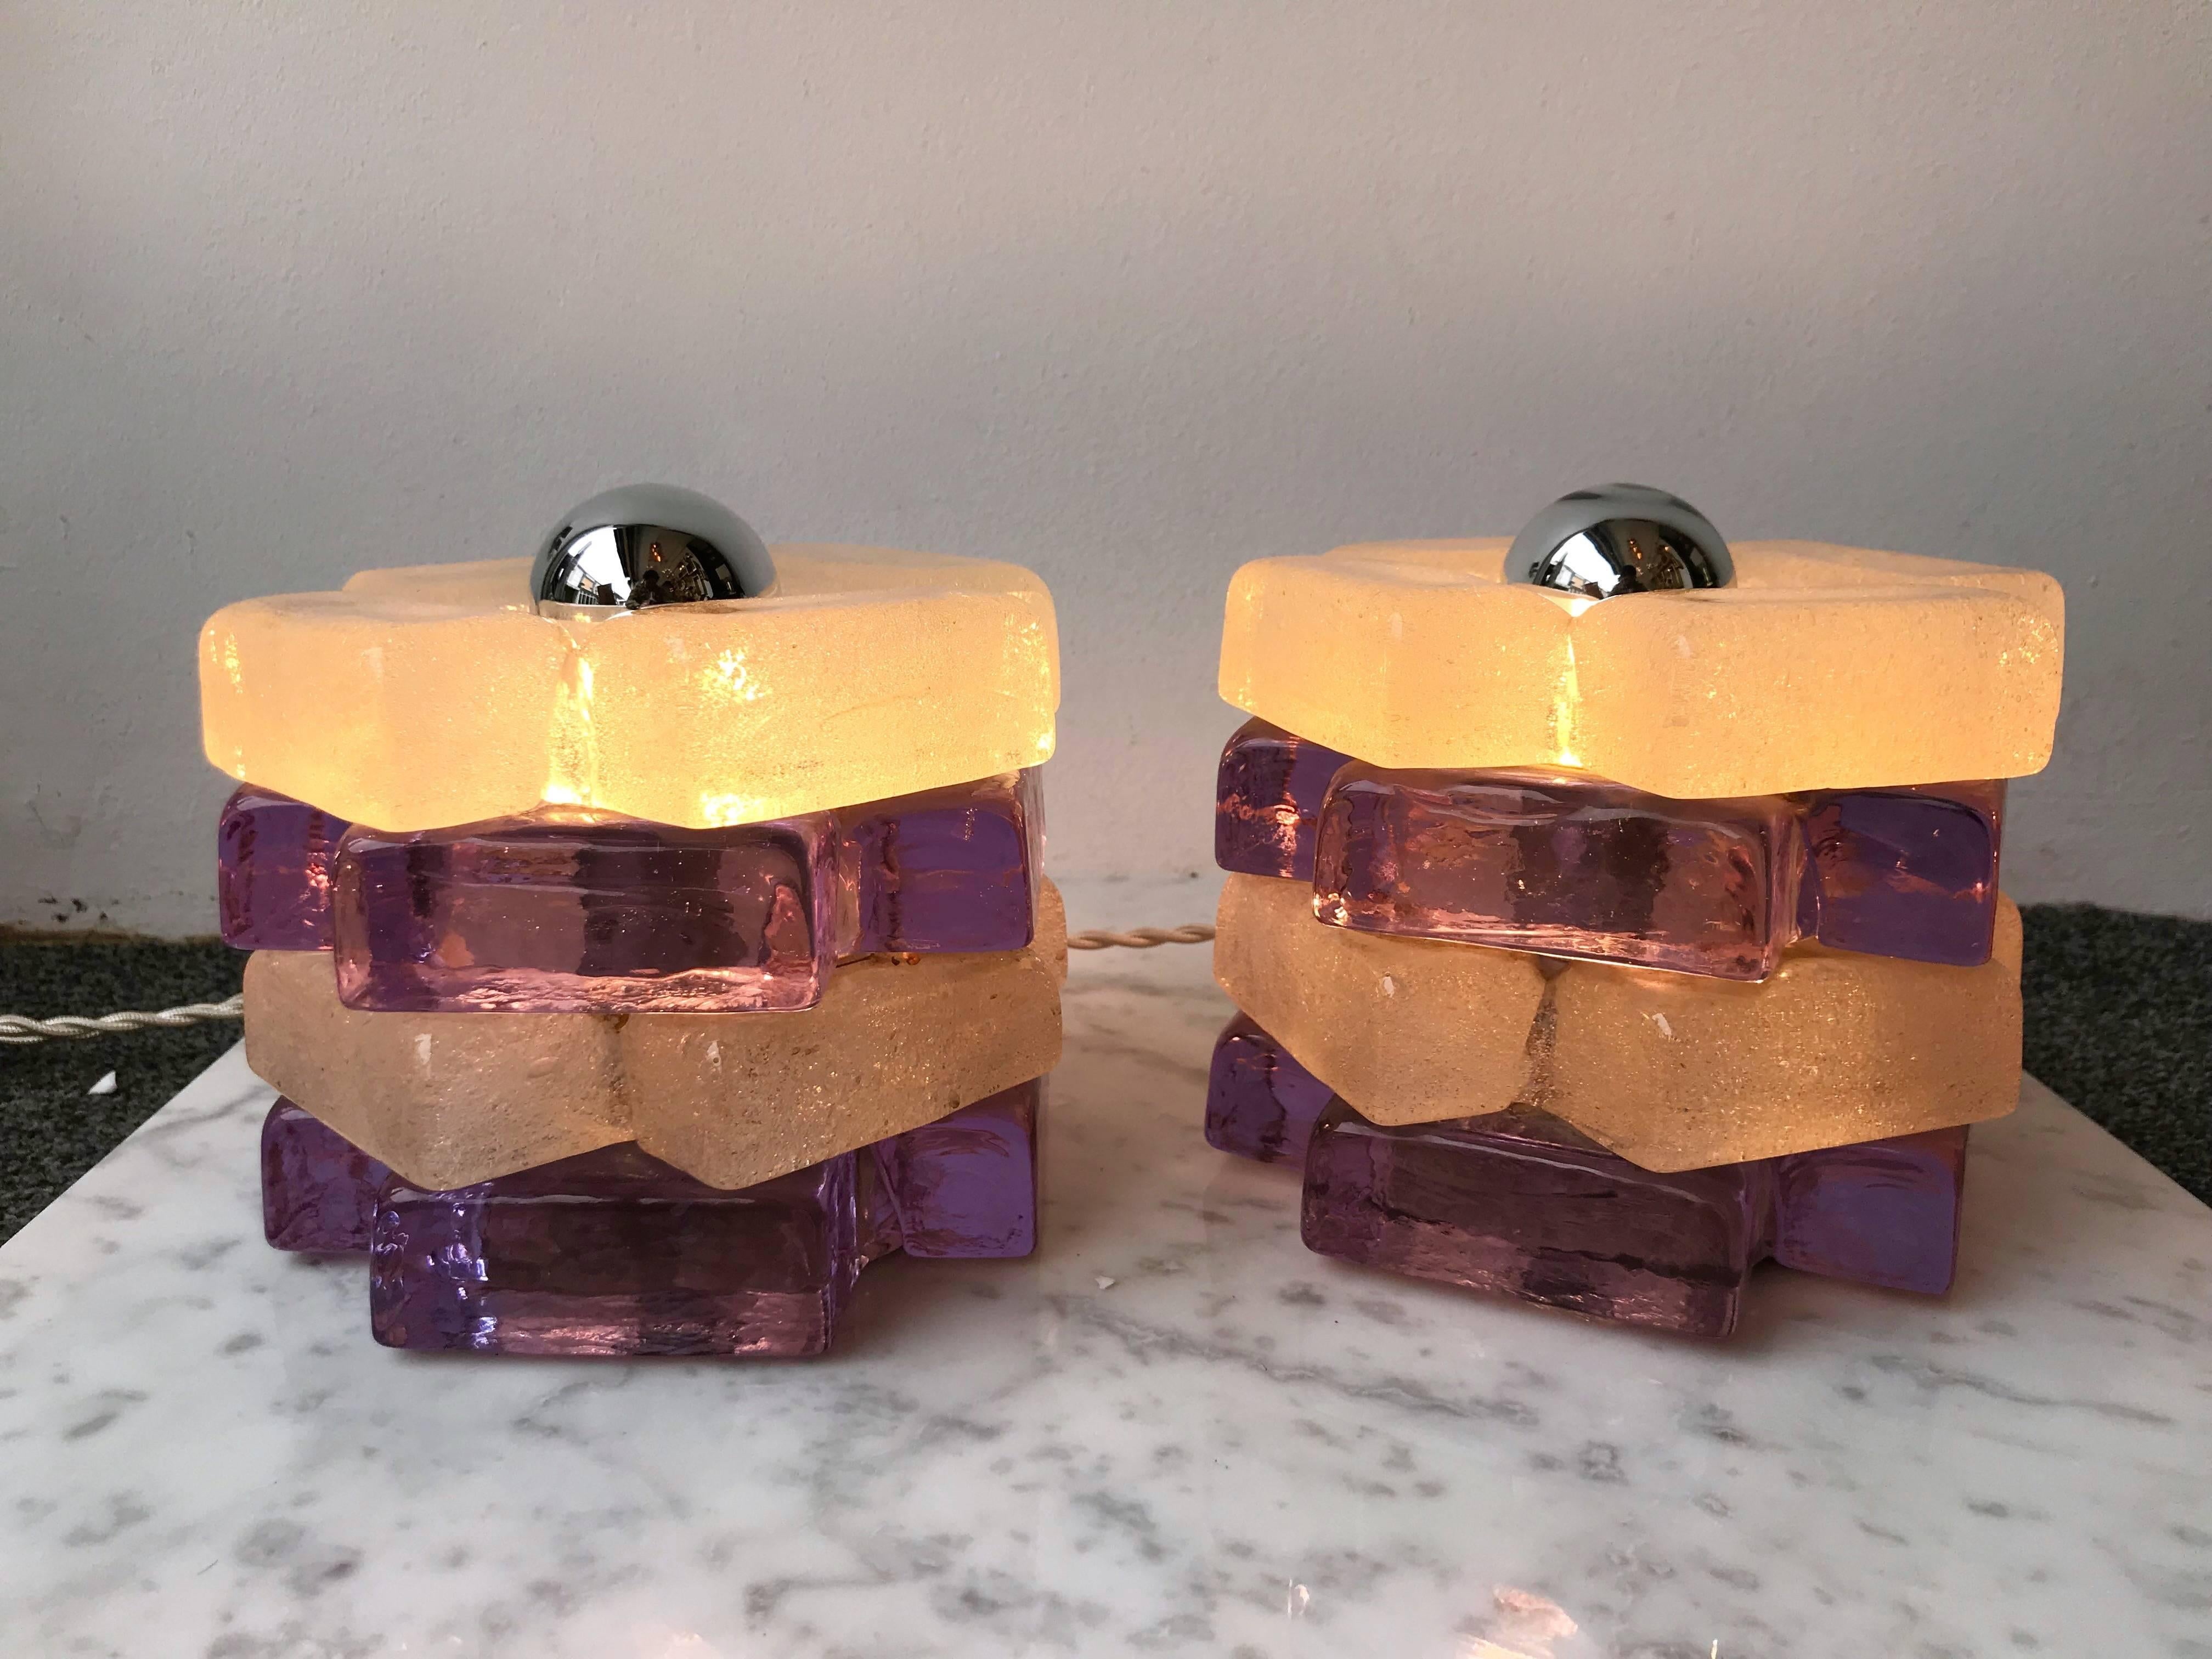 Pair of bedside or table lamps in purple pink and white clear glass cube by the manufacture Poliarte in Verona. Famous design like Mazzega Murano, Venini, Vistosi, La Murrina, VeArt, Carlo Aldo Nason.